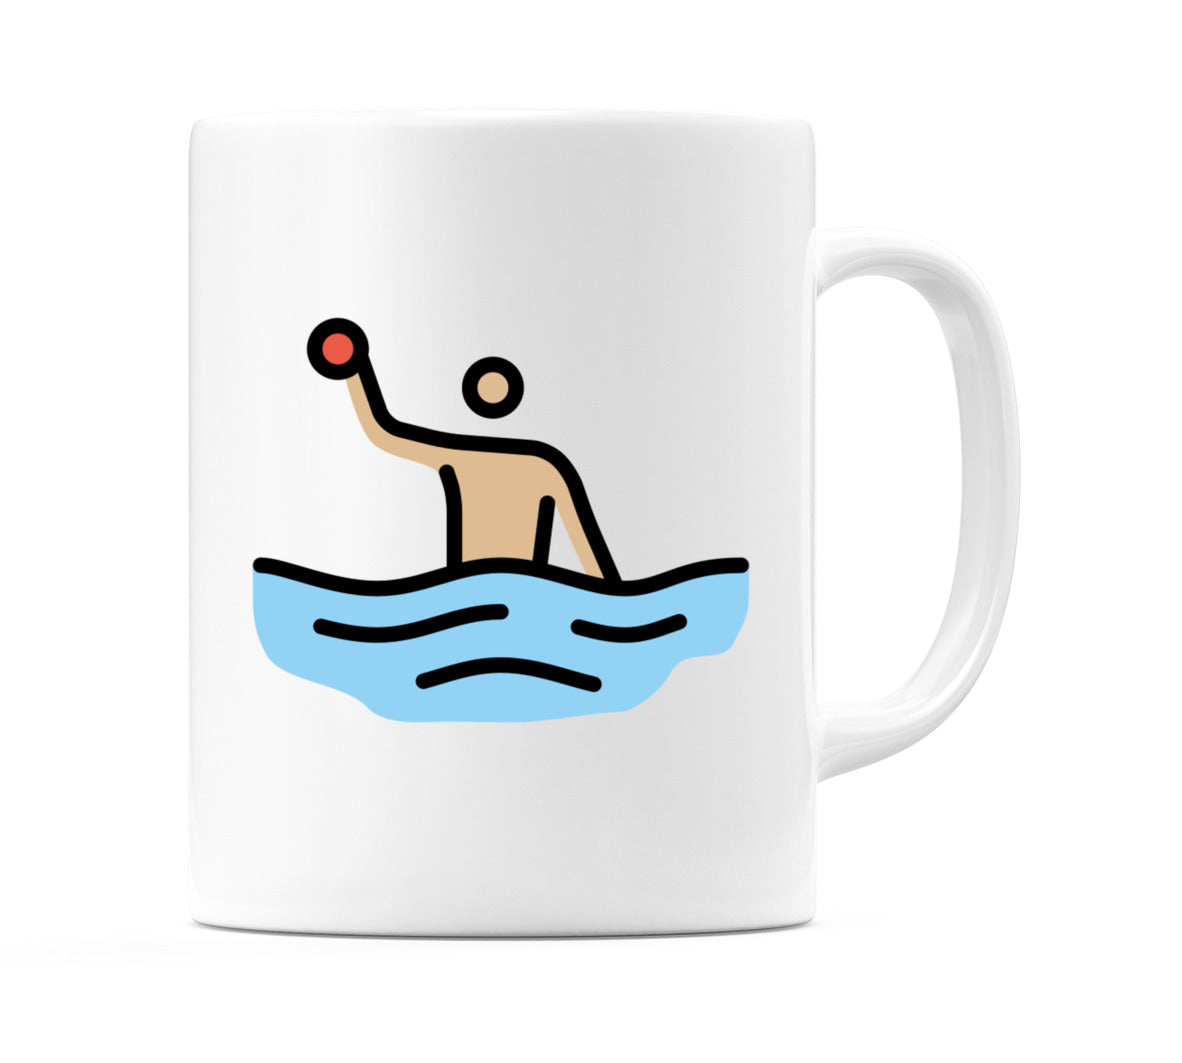 Person Playing Water Polo: Medium-Light Skin Tone Emoji Mug